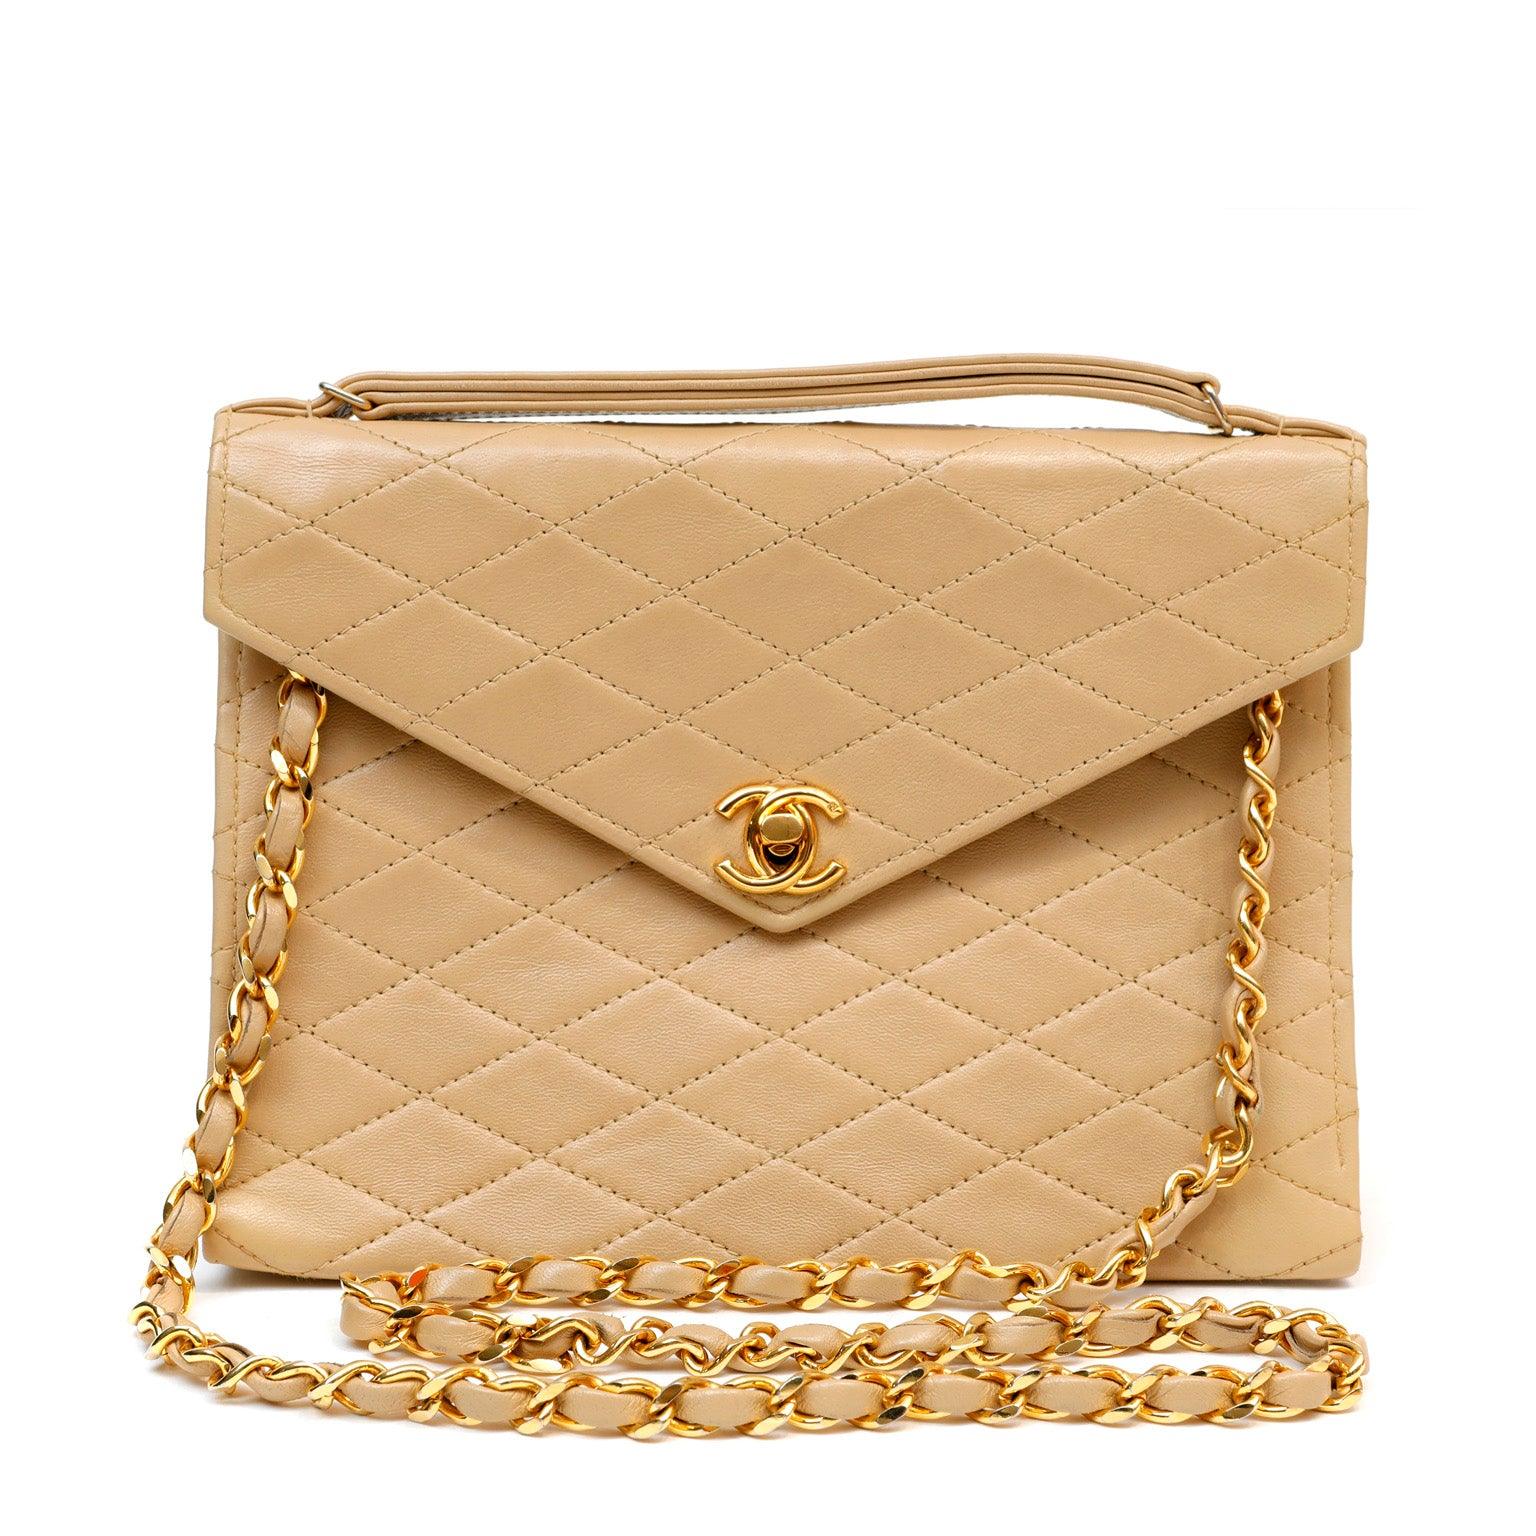 Shop the iconic Chanel beige leather vintage envelope flap bag